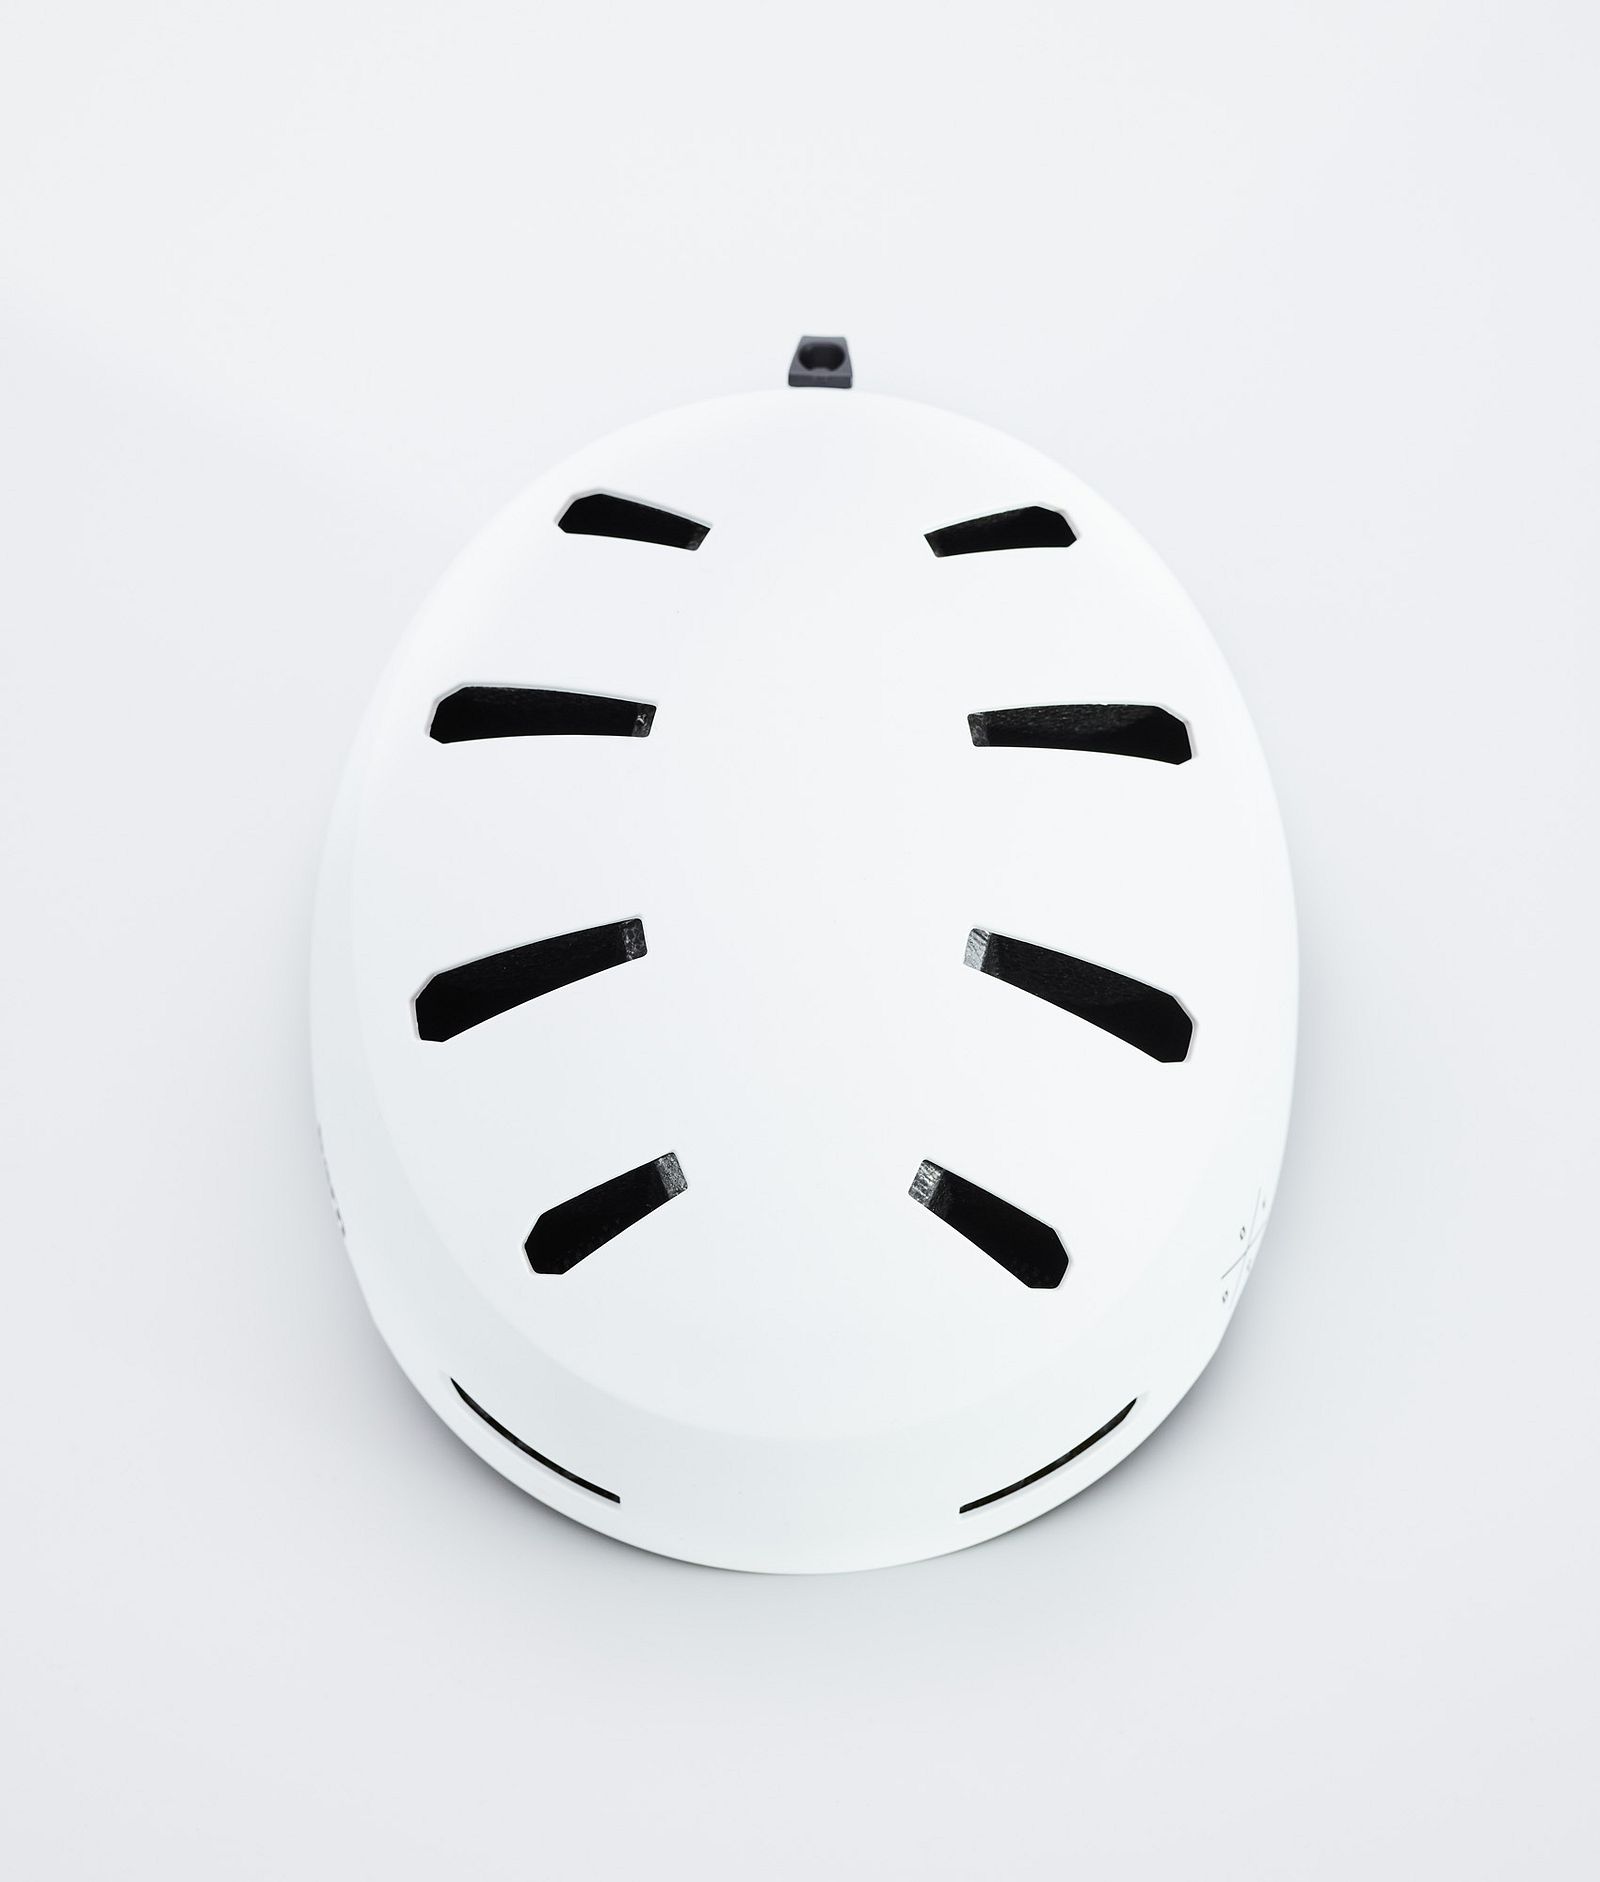 Macon 2.0 MIPS Ski Helmet X-Up Matte White w/ Black